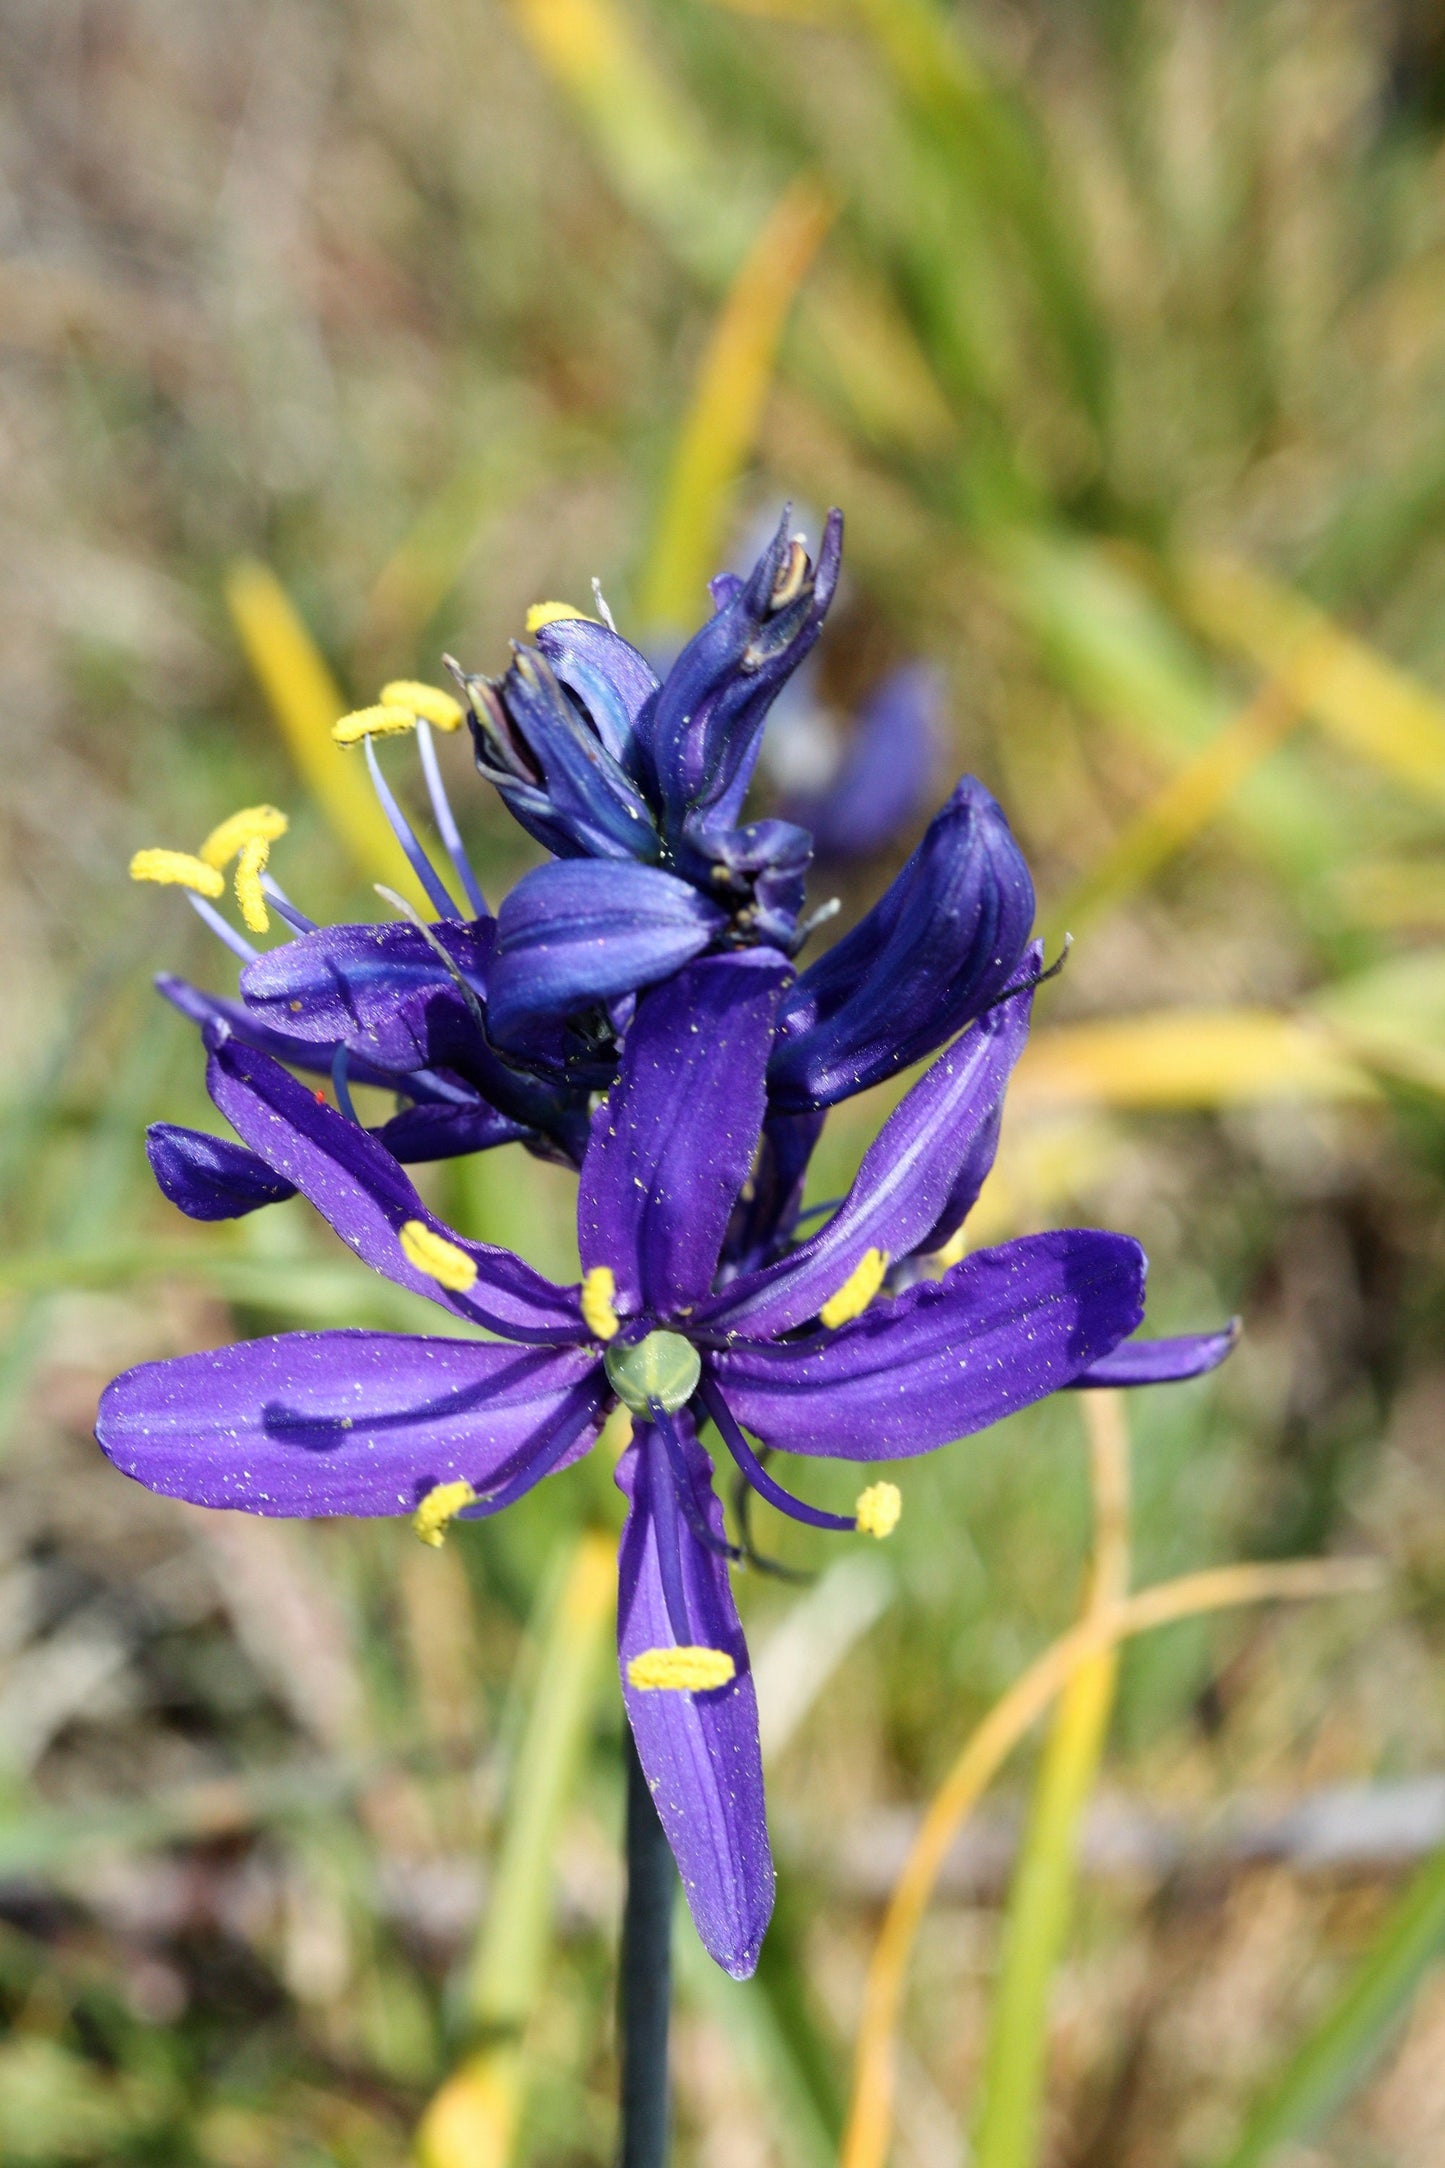 30 BLUE CAMAS Camass Lily Wild Indian Hyacinth Camassia Quamash Flower Herb Seeds